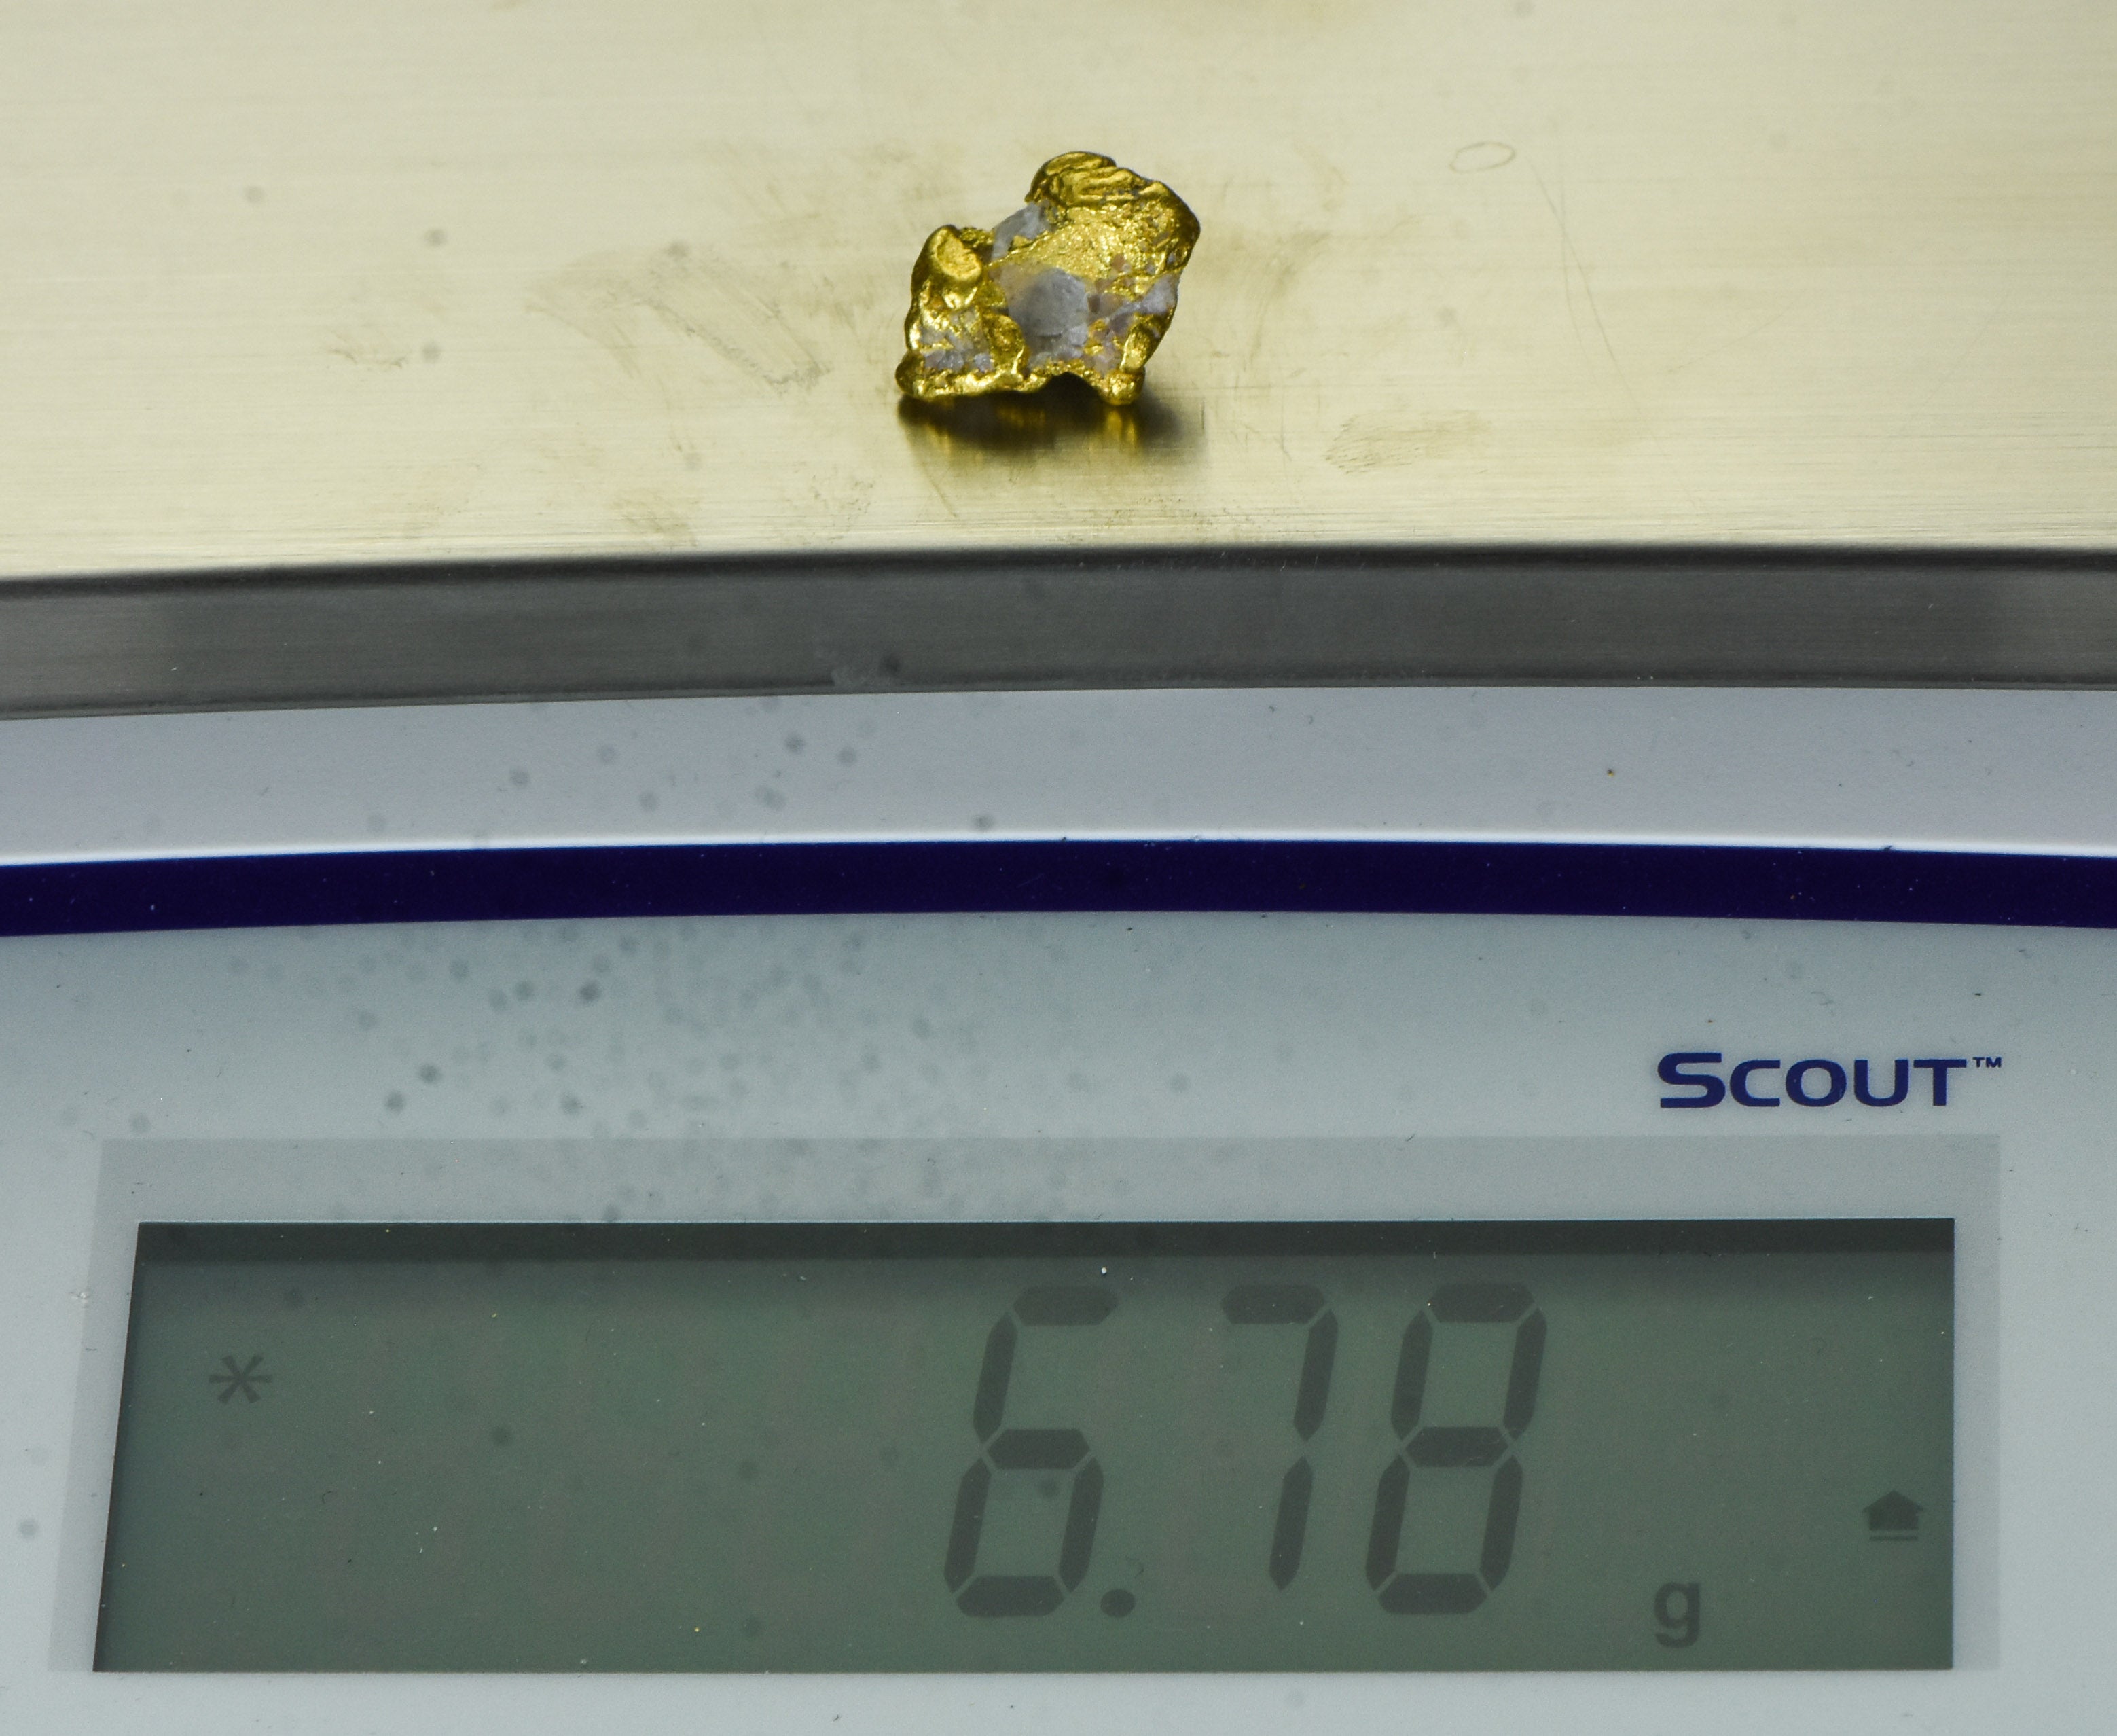 QN-110 "Alaskan BC Gold Nuggets with Quartz" Genuine 6.78 Grams